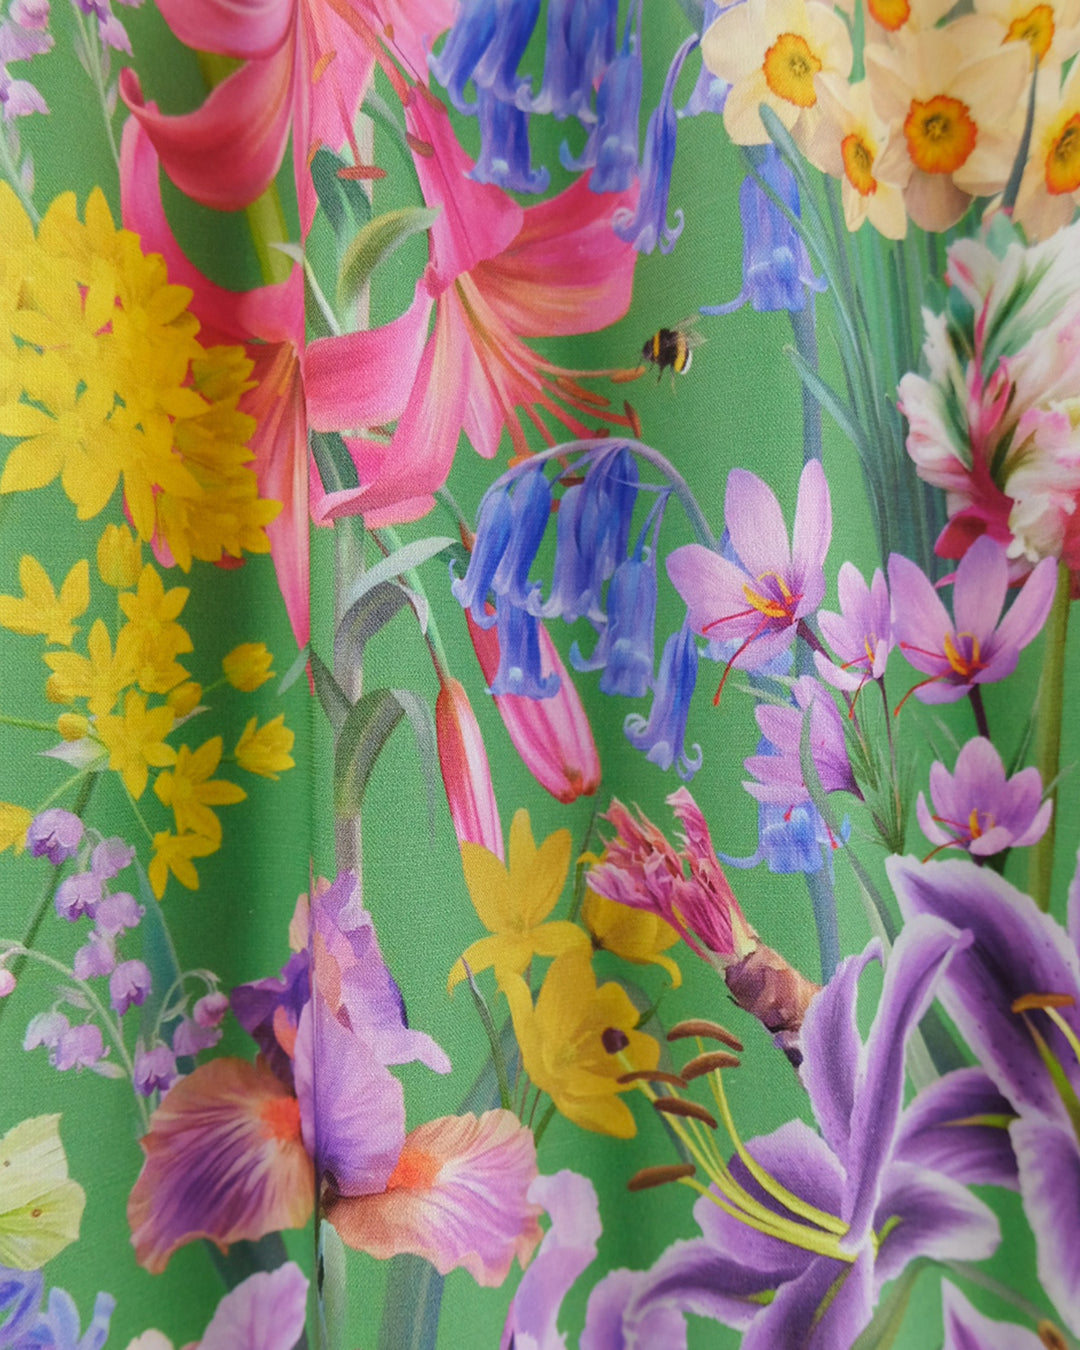 bauldry-botanicals-floral-flower-print-design-organic-cotton-hemp-slub-bees-butterflies-nature-inspired-fabric-curtains-drapery-cushions-blinds